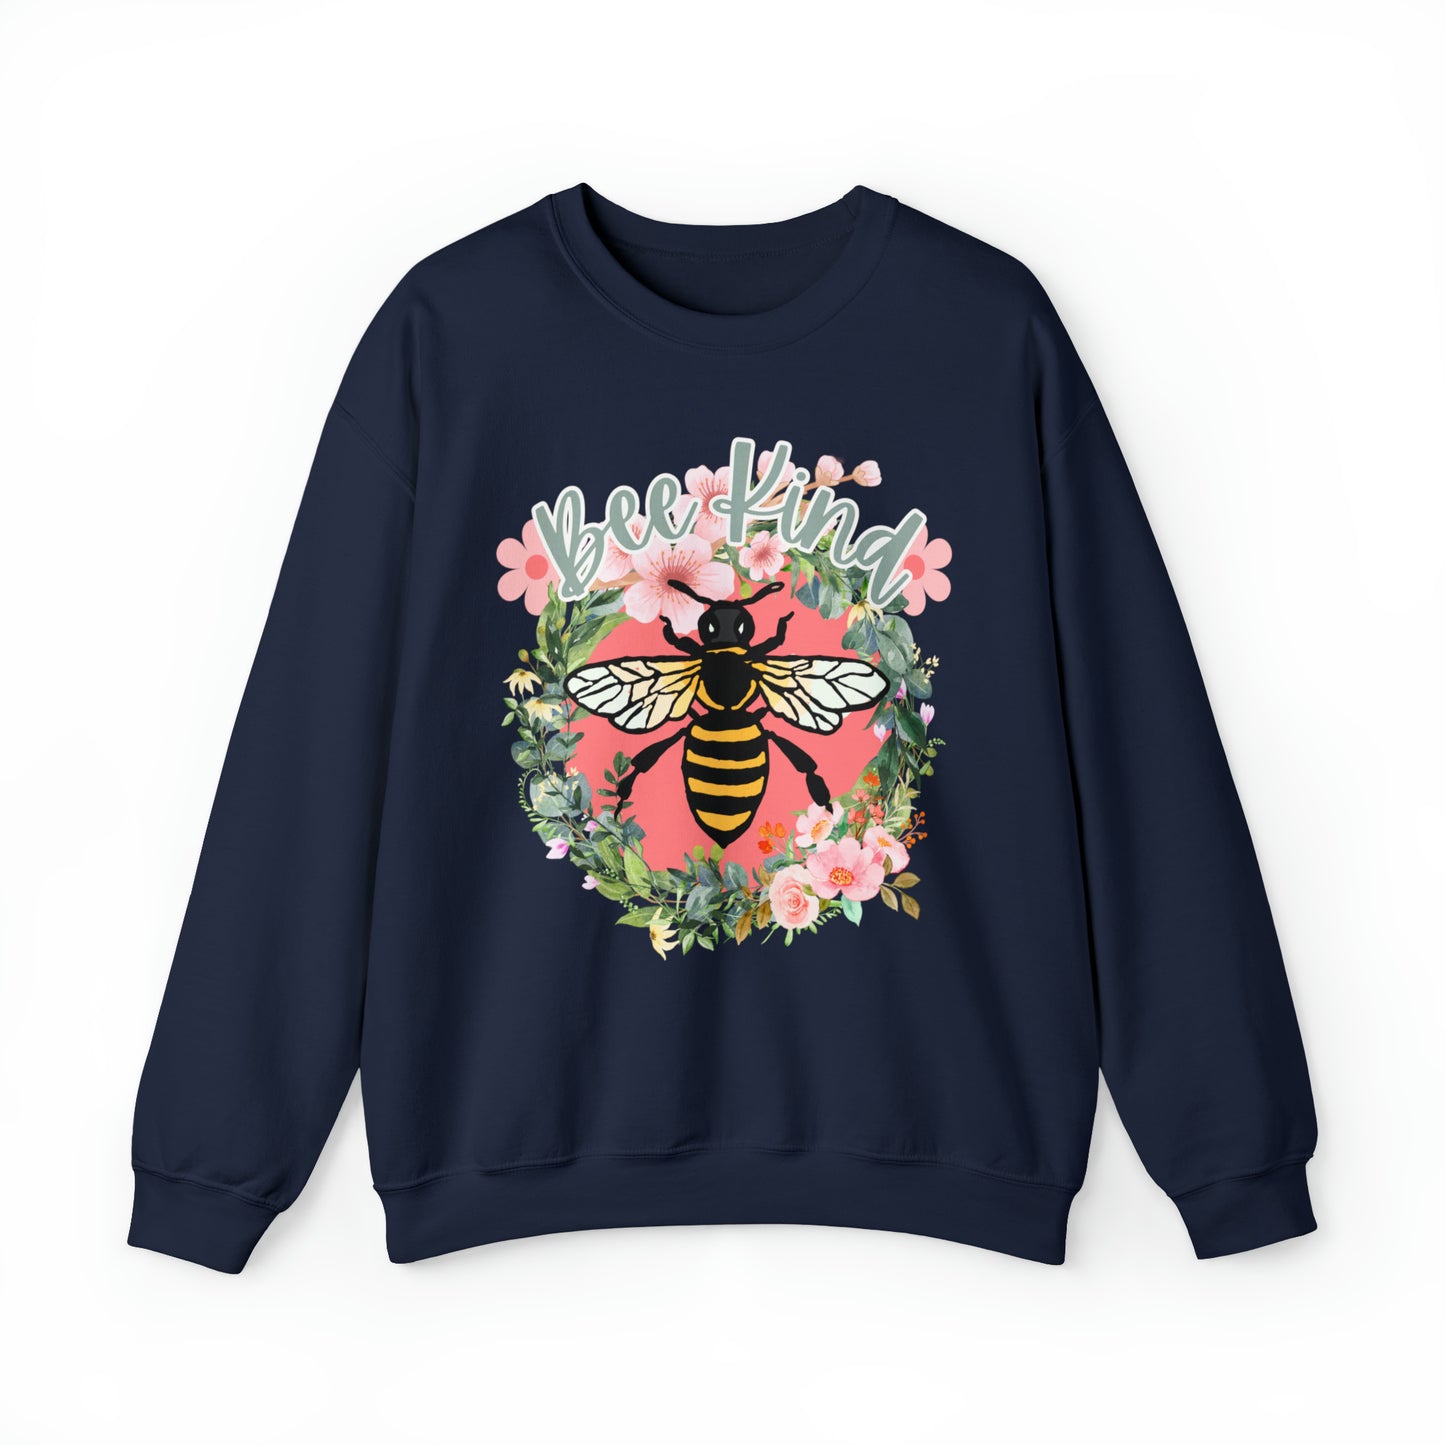 Adult "Bee Kind" Unisex Heavy Blend Crewneck Sweatshirt